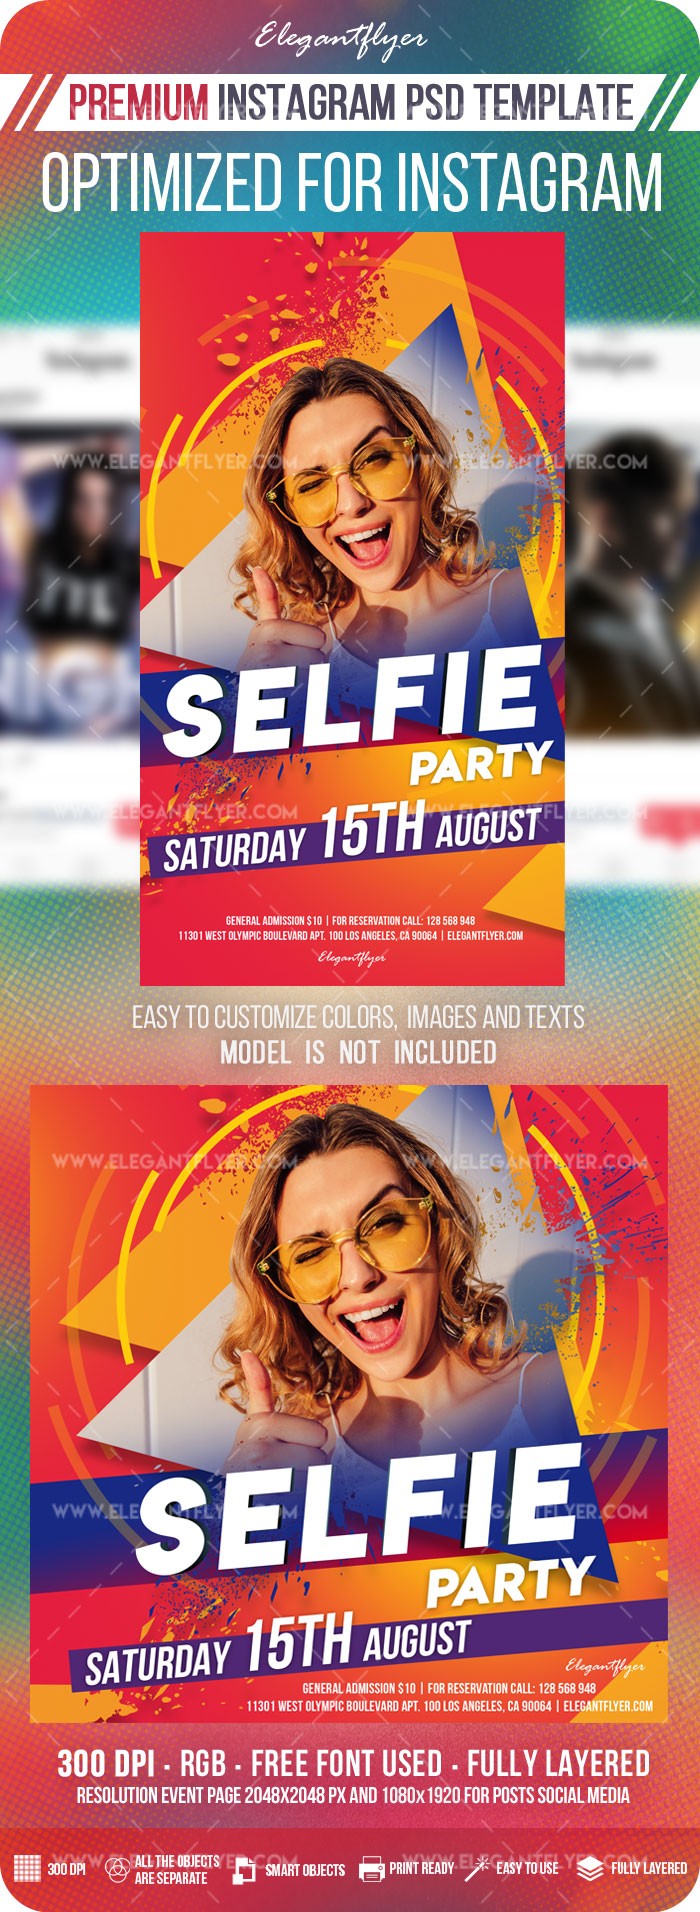 Selfie Party Instagram by ElegantFlyer